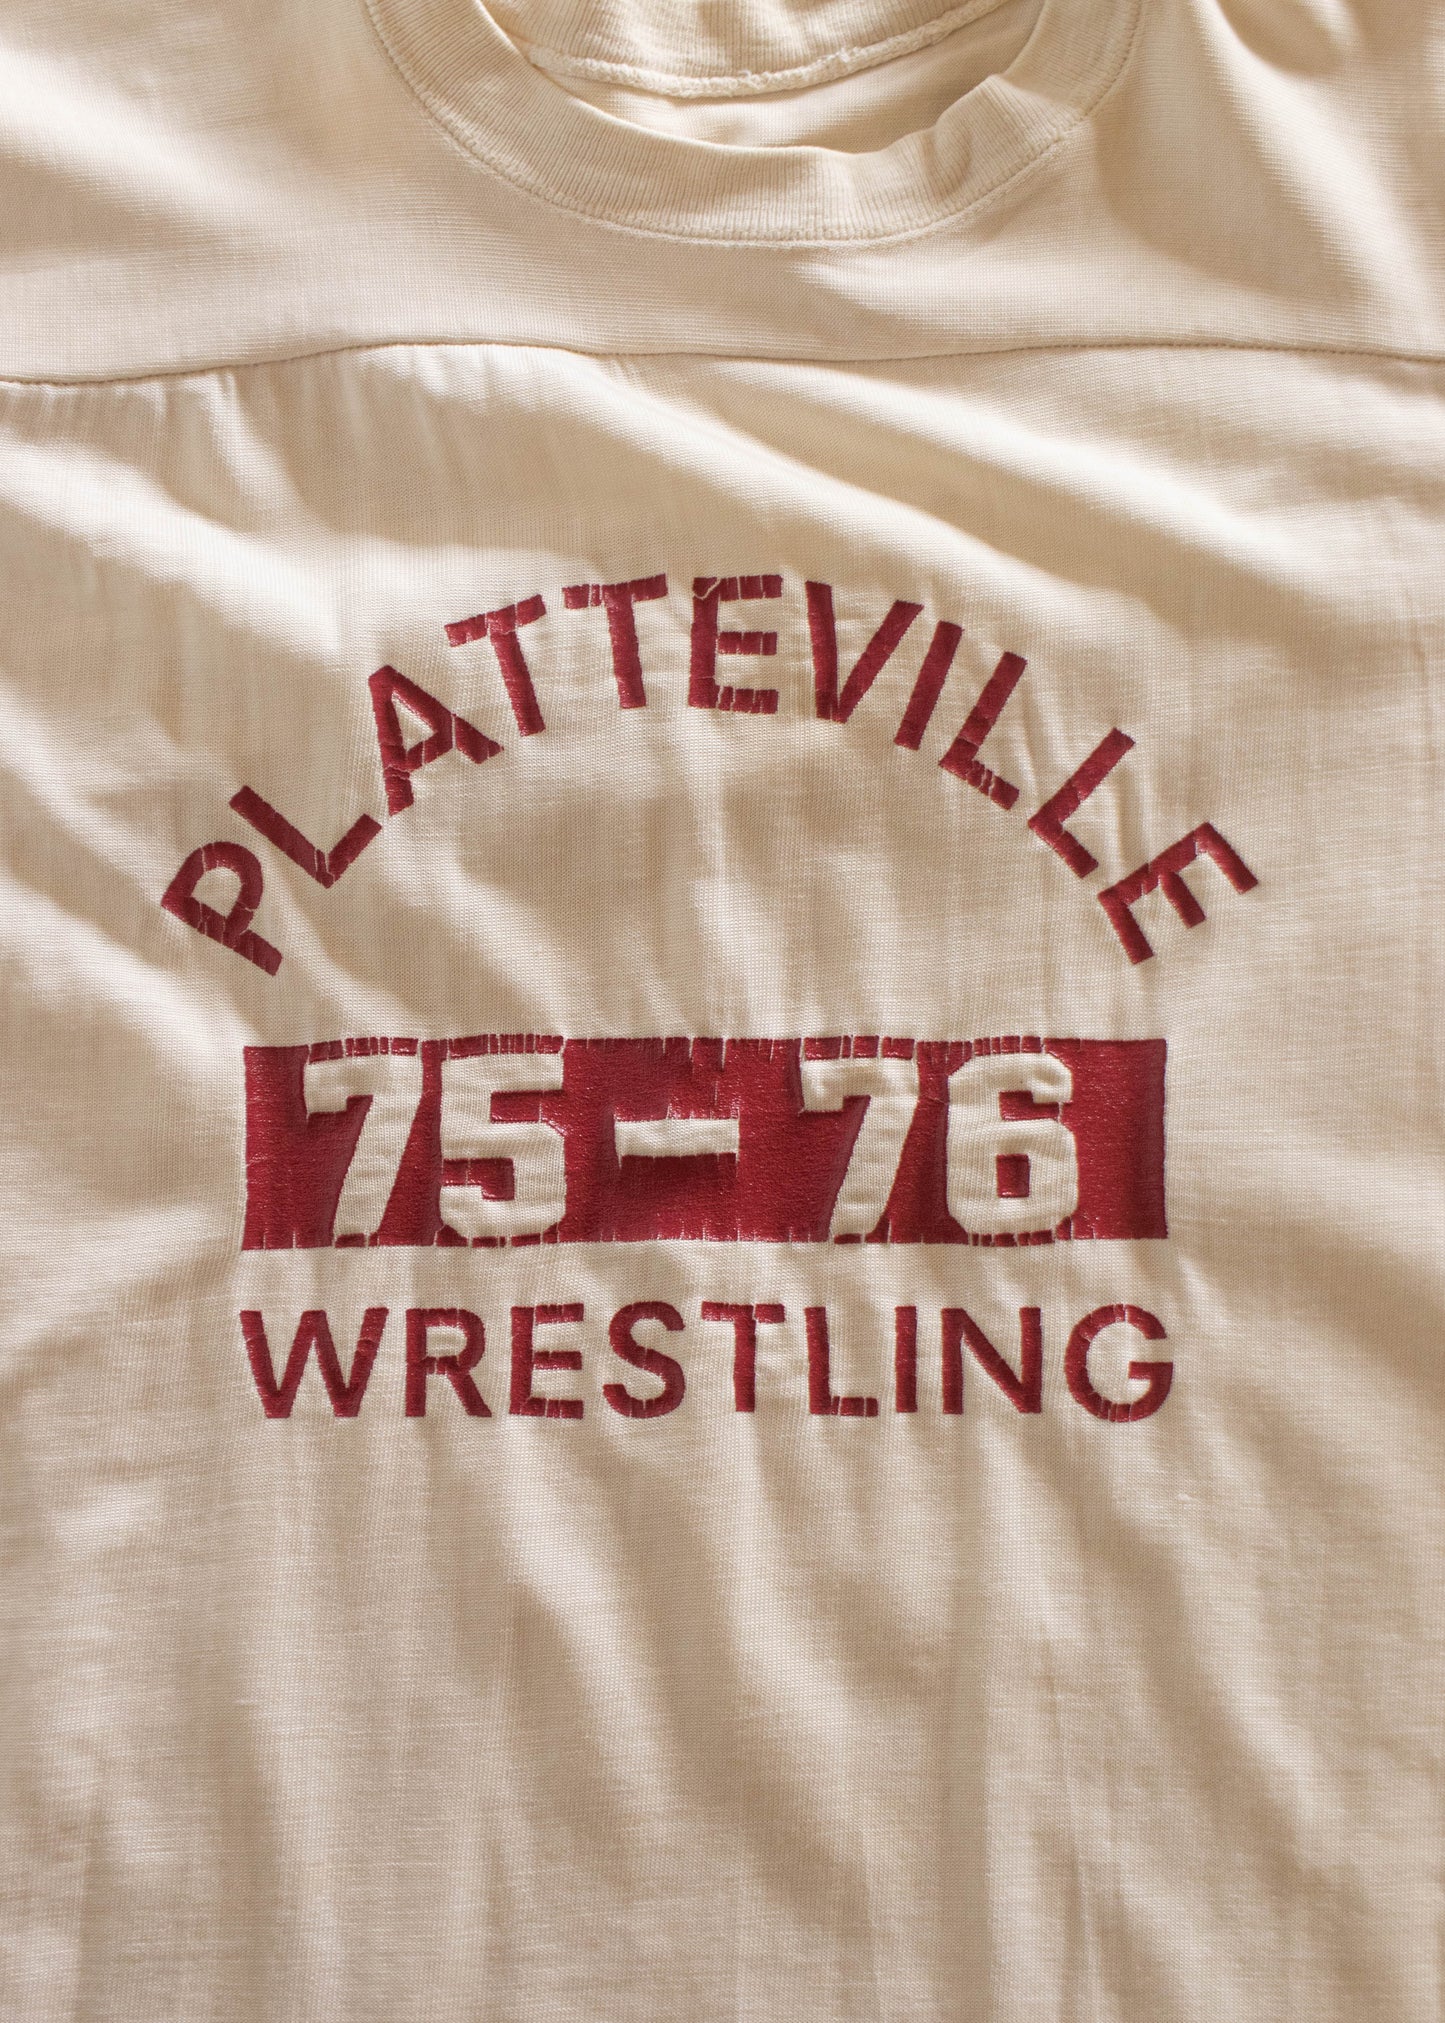 1970s Champion Platteville Wrestling Jersey Size S/M